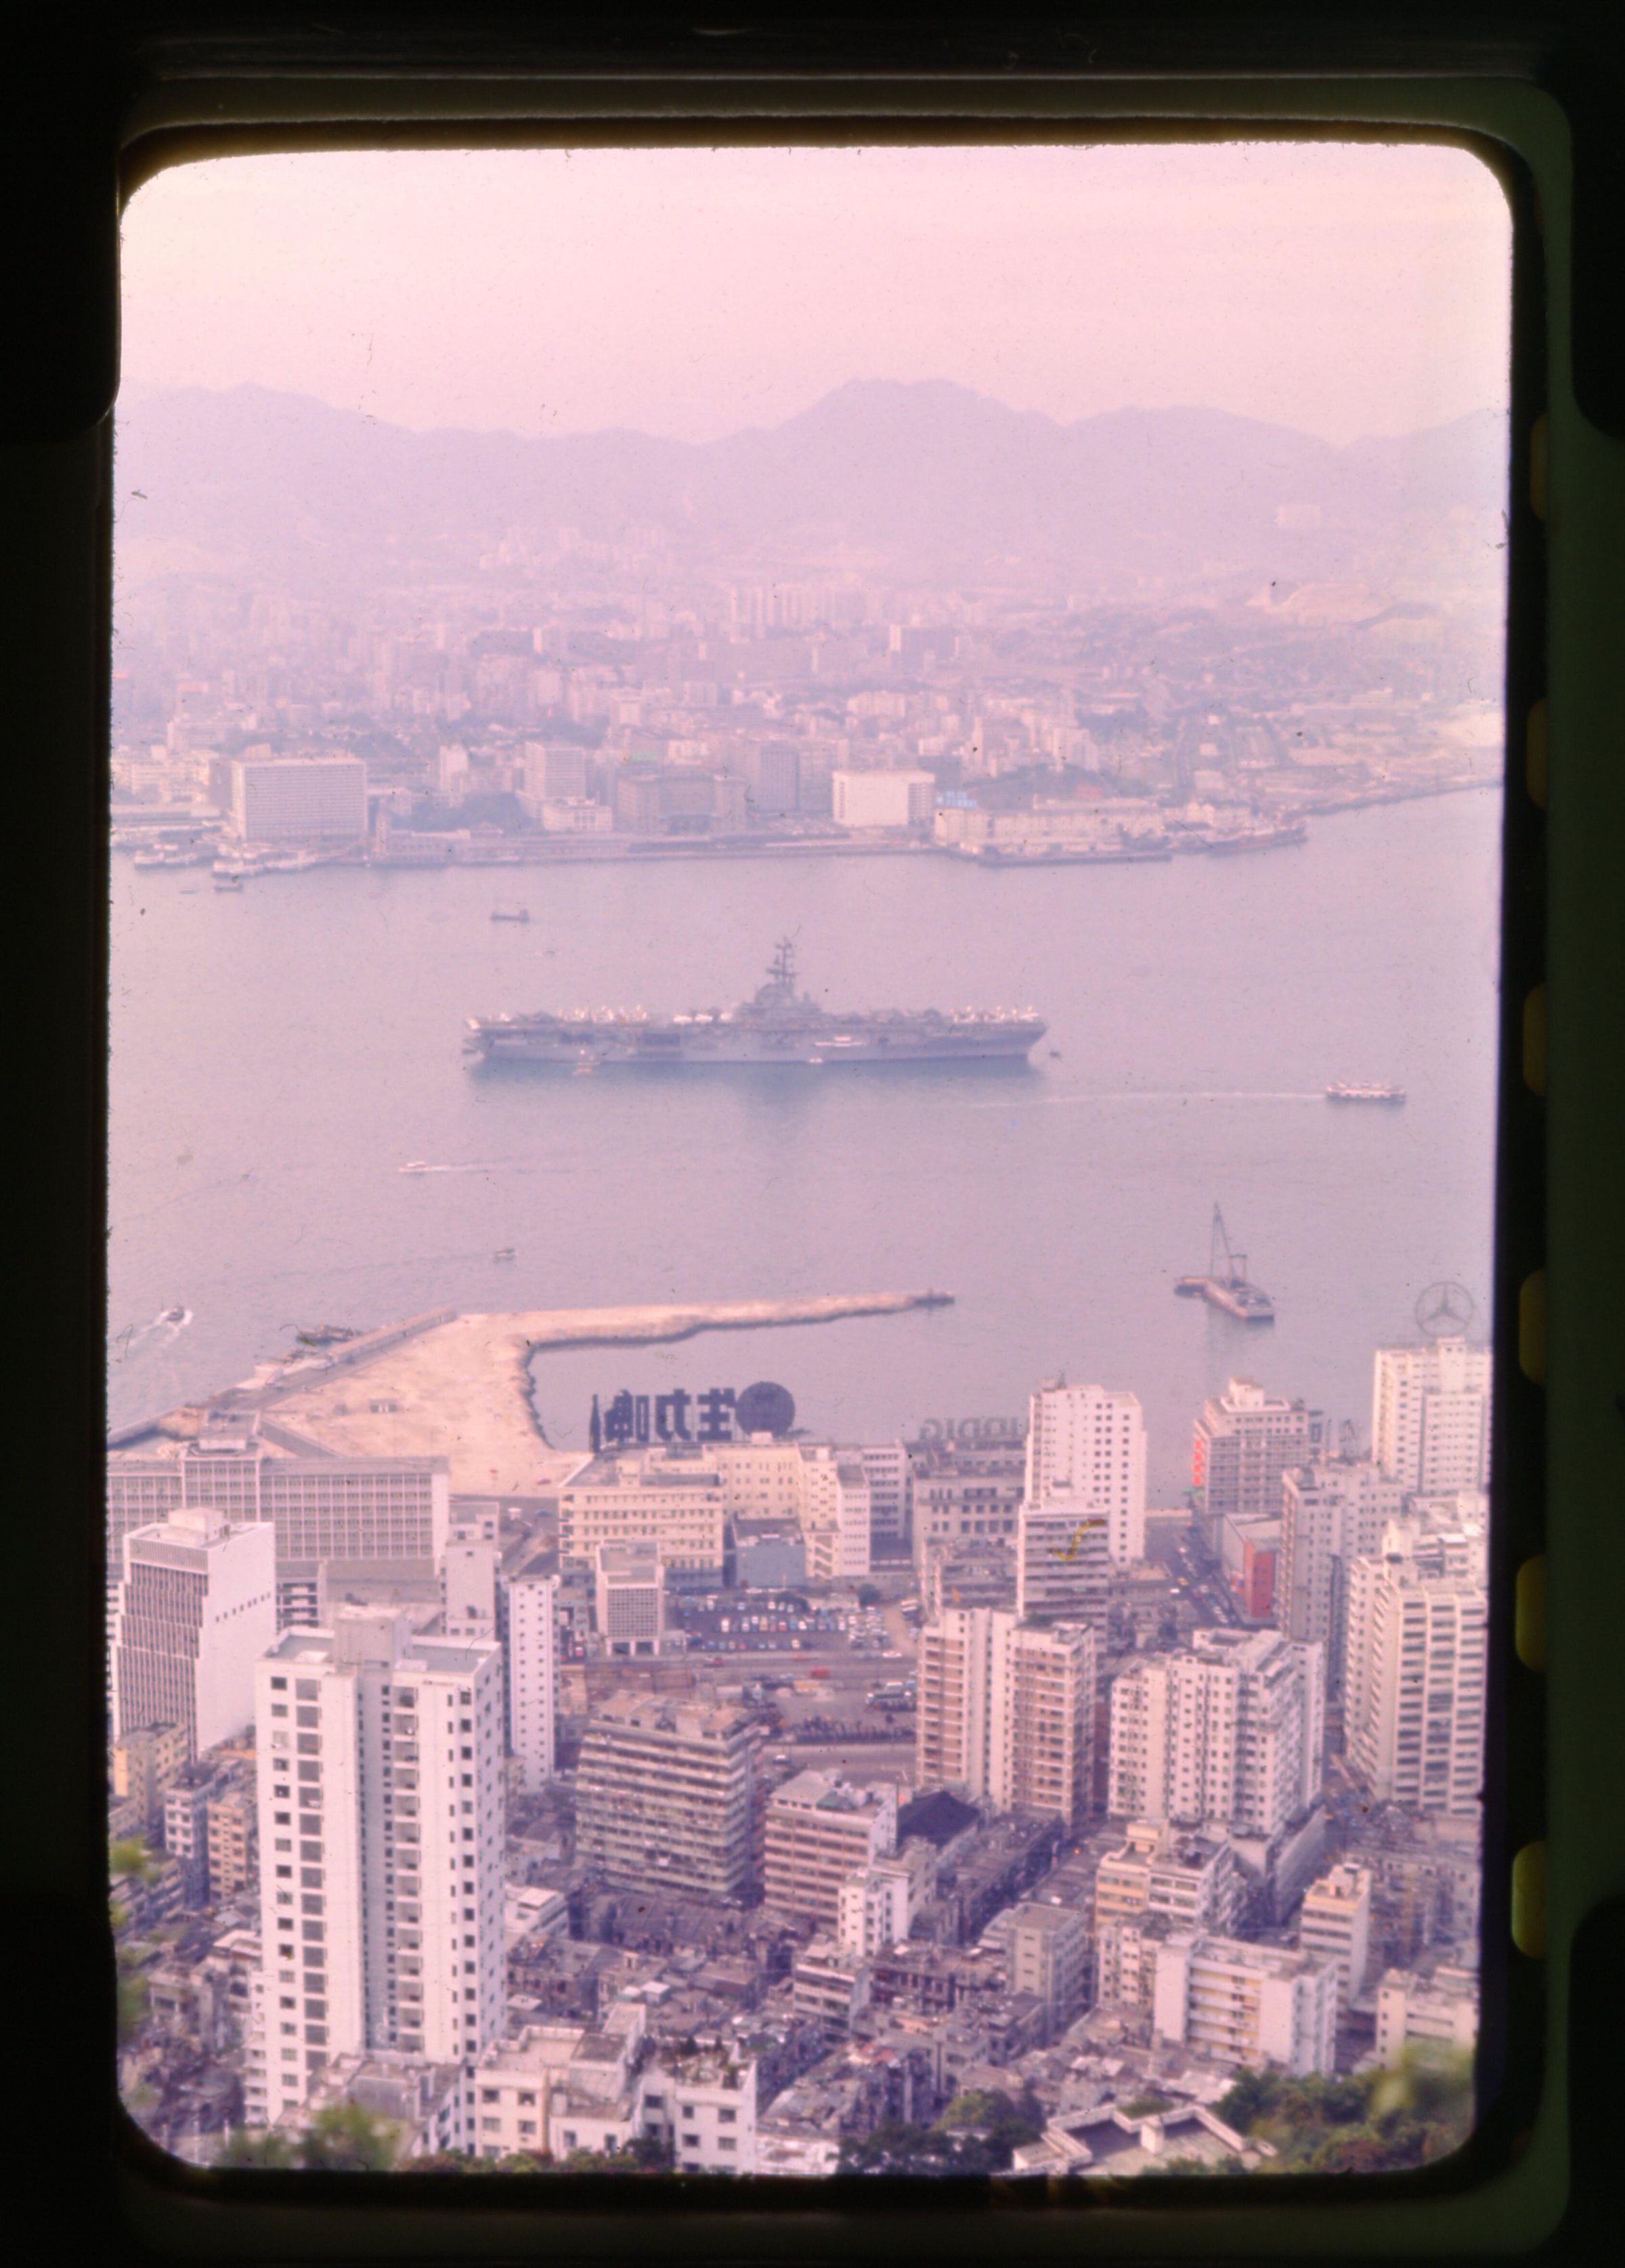 Primary Image of The USS Yorktown (CVS-10) Arrives in Honk Kong